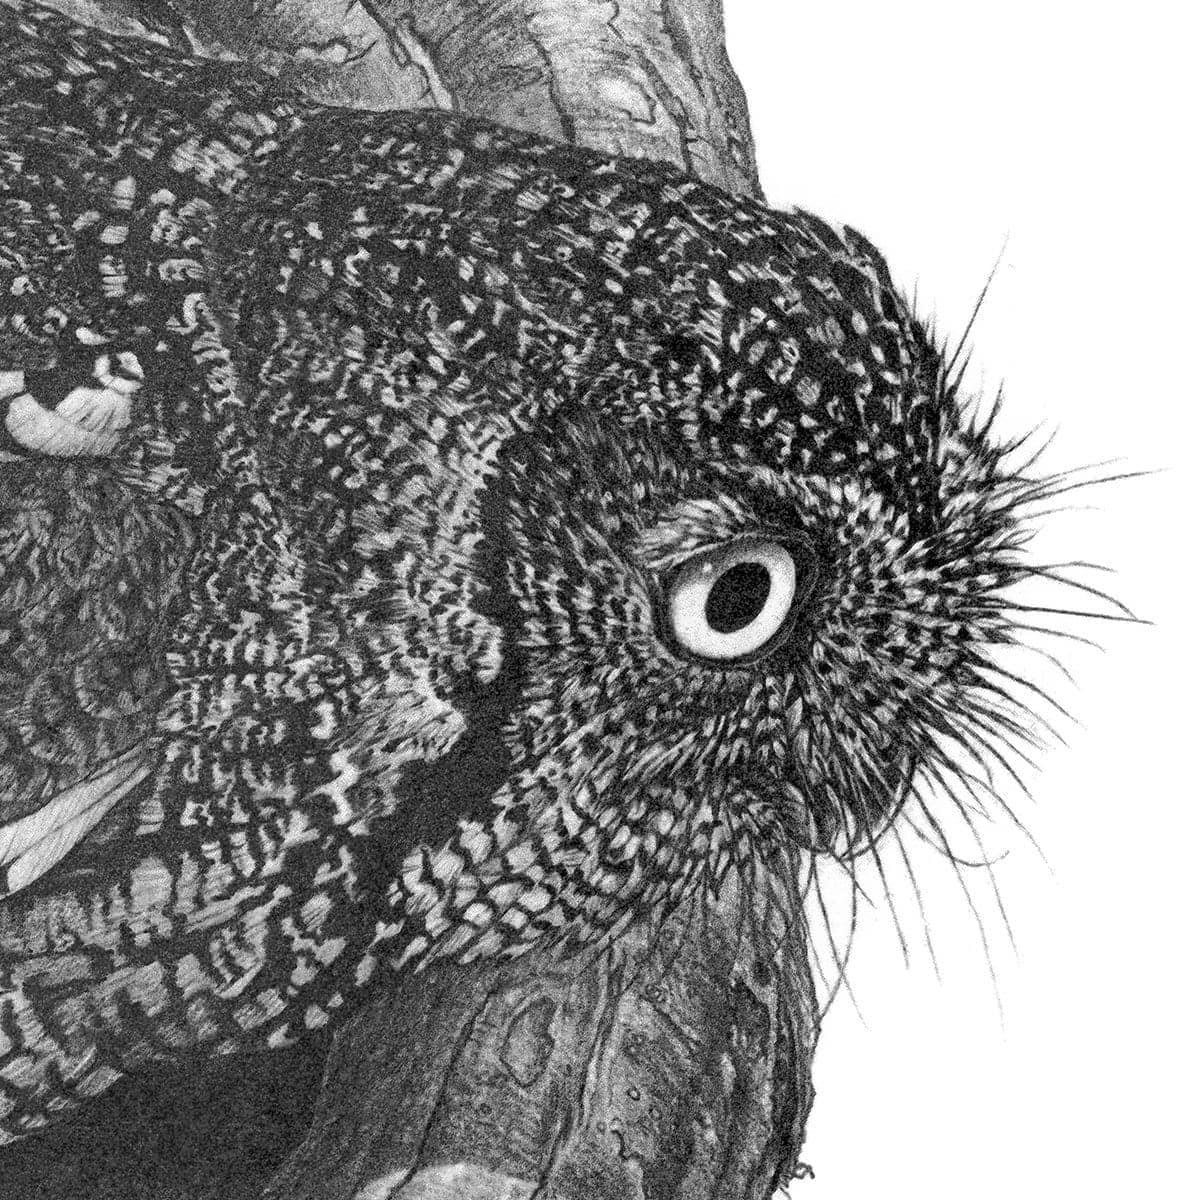 Whiskered Owl - Canvas Print | Artwork by Glen Loates